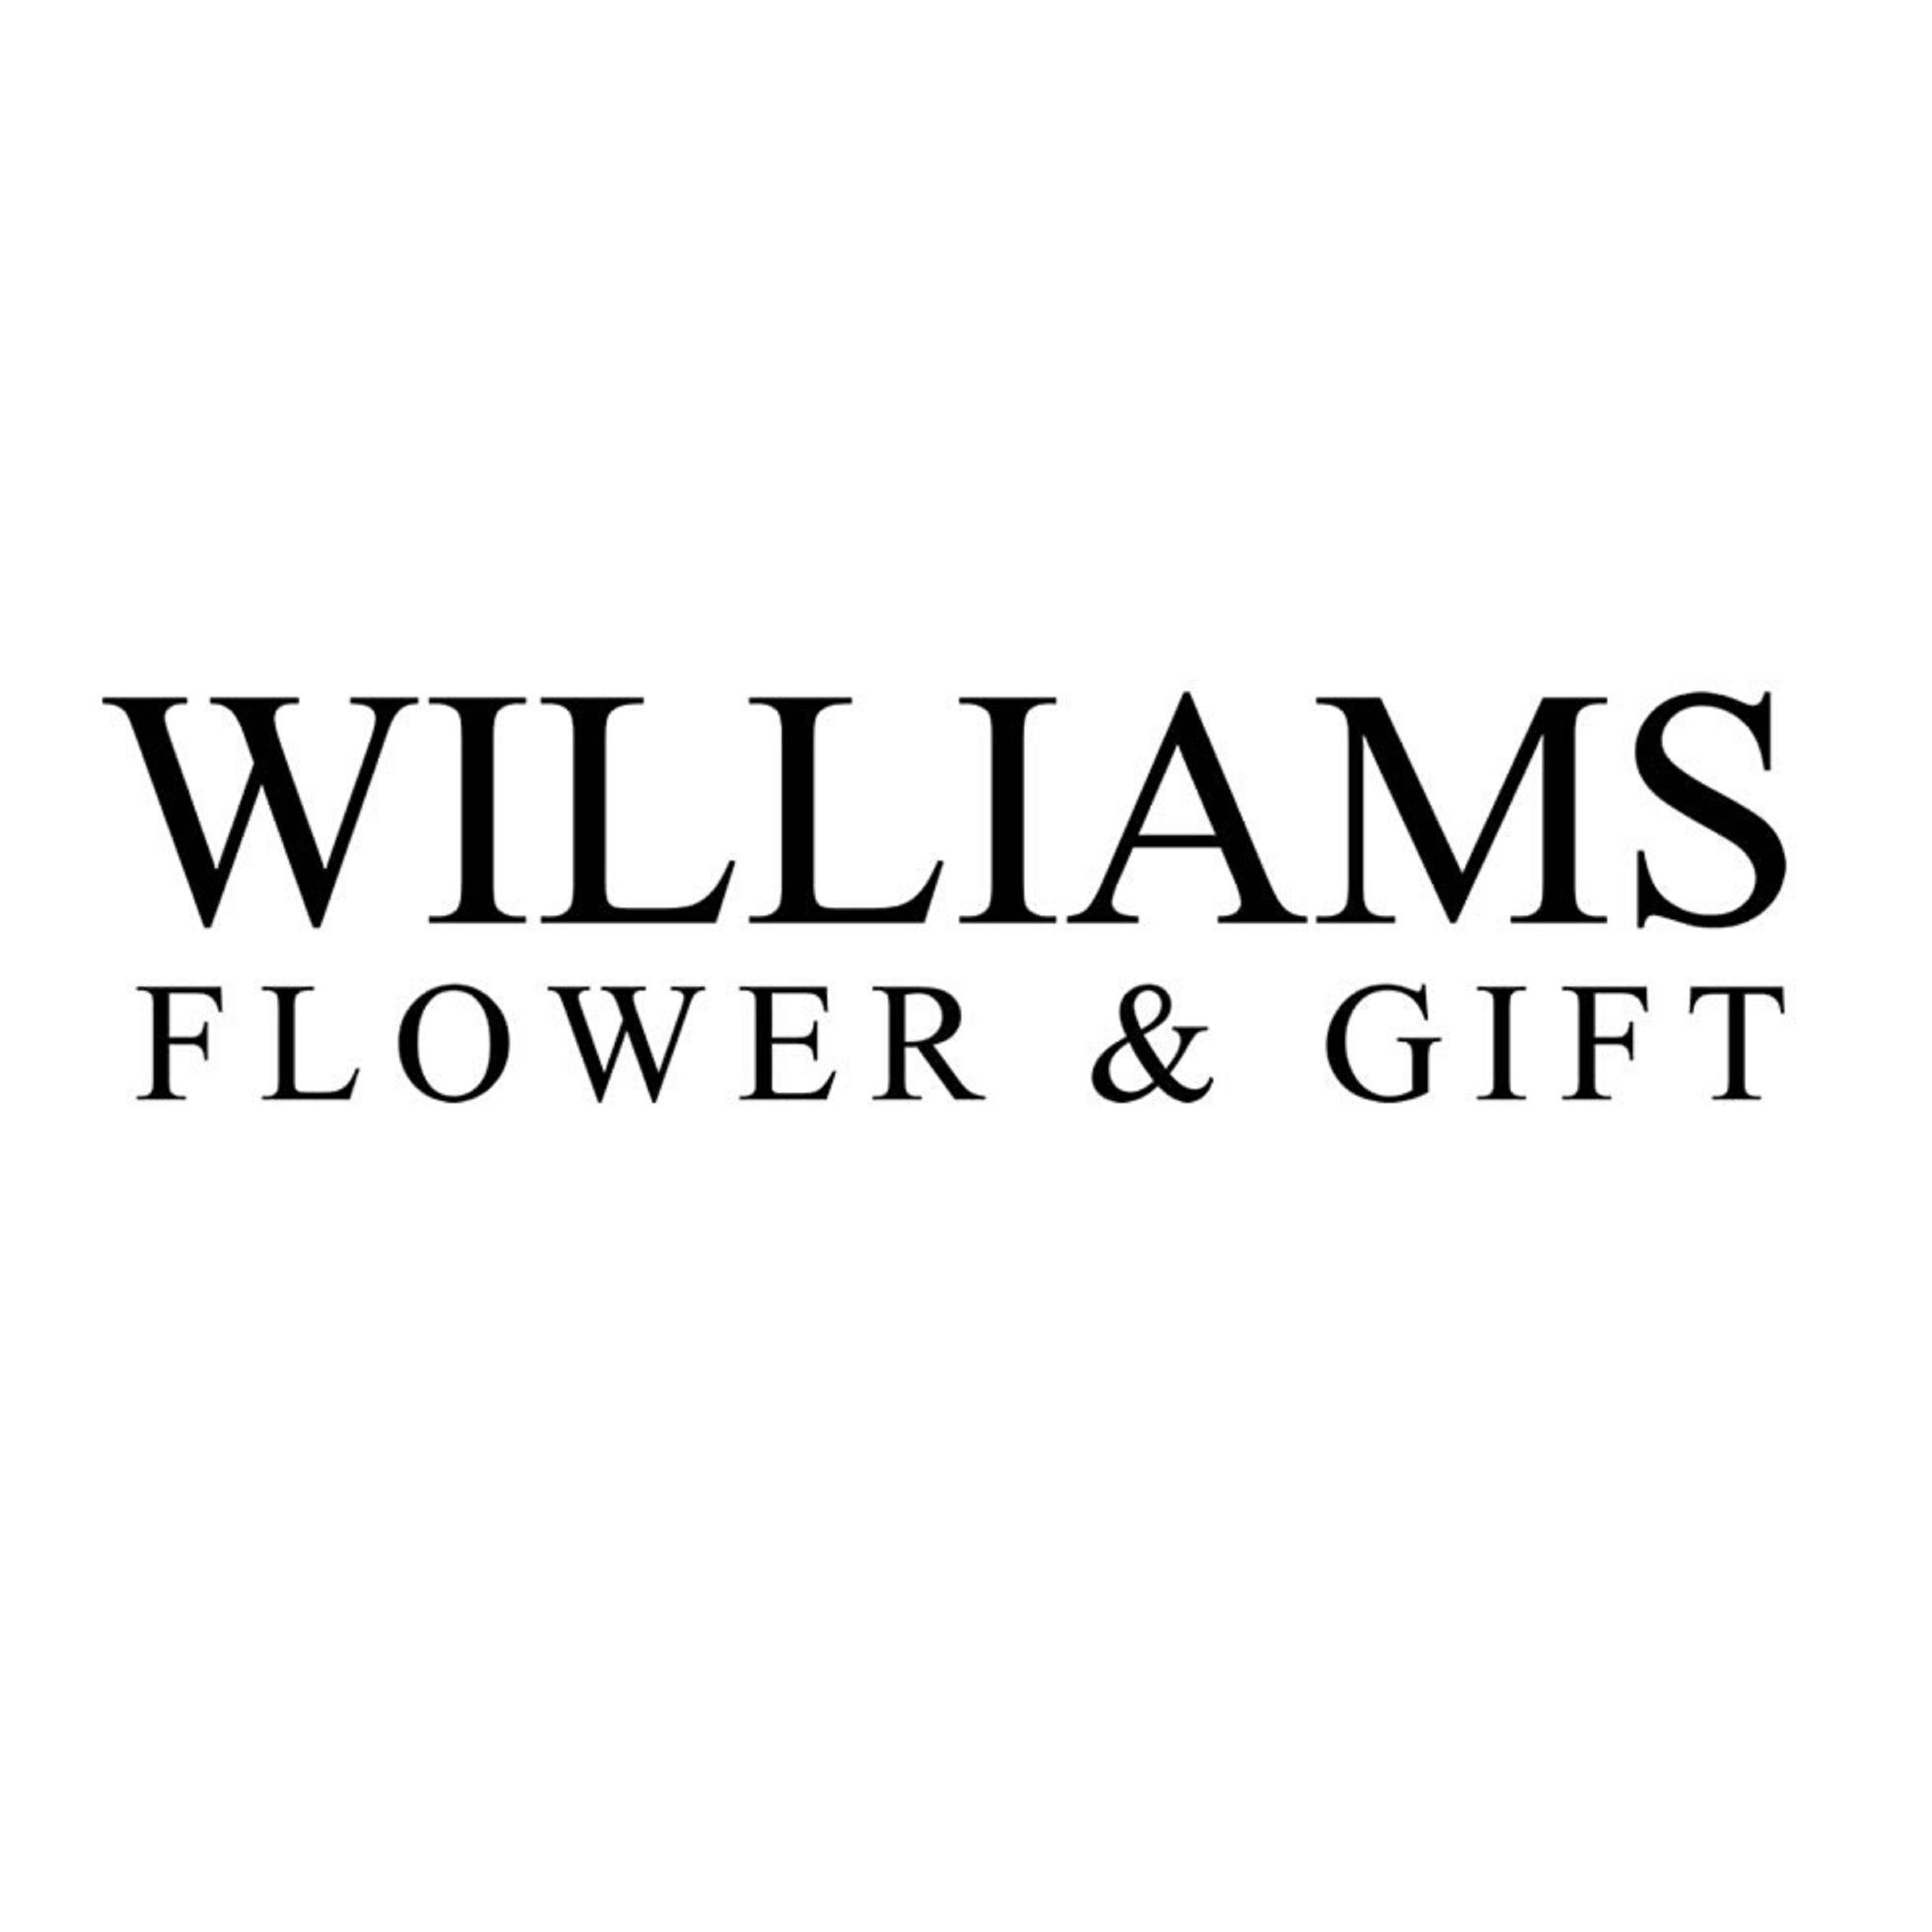 Williams Flower & Gift - Port Orchard Florist Logo